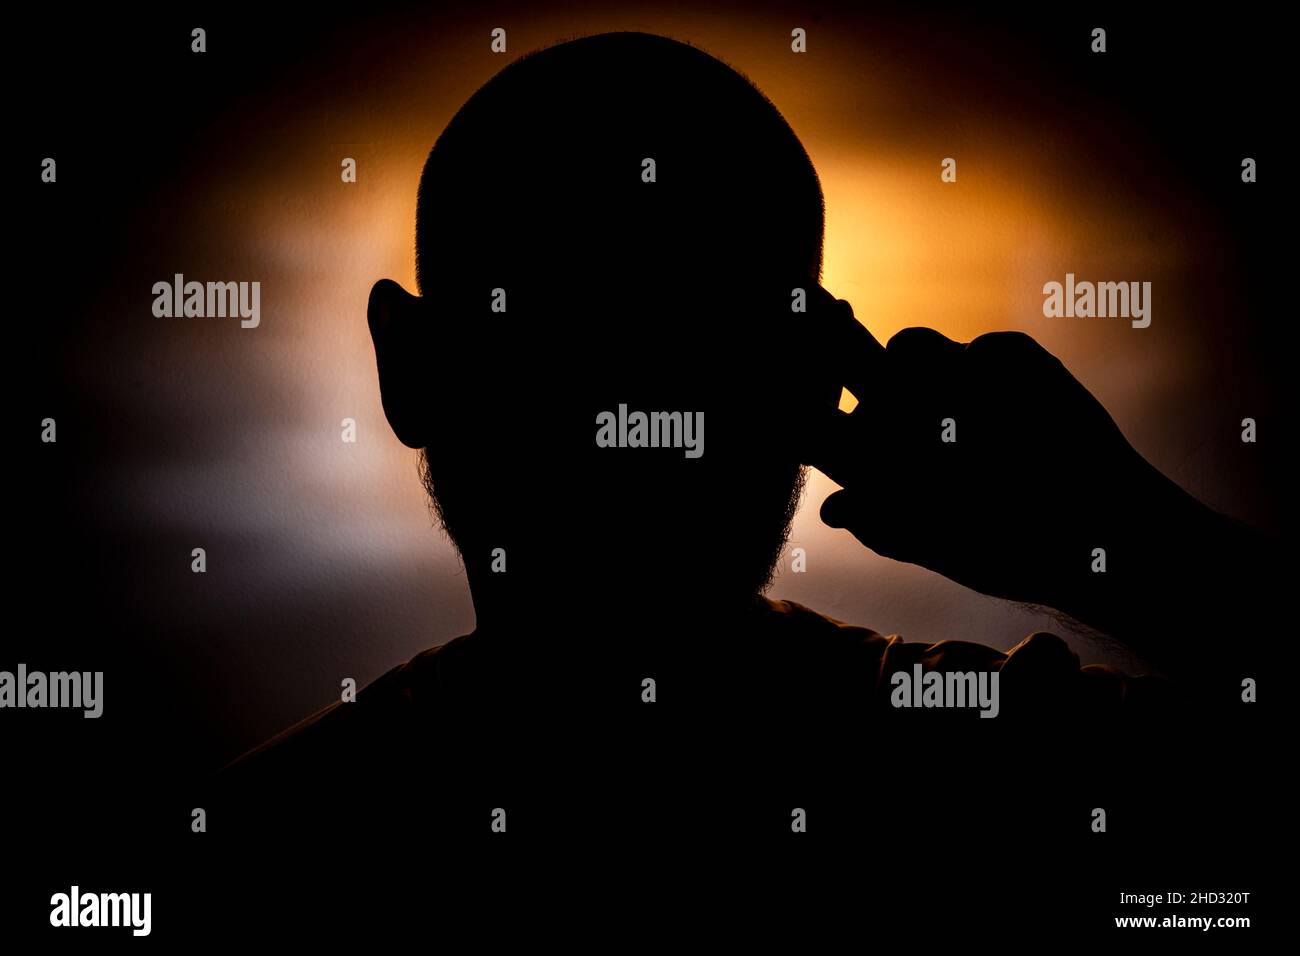 Close-up silhouette of a man's head against a orange background. Salvador, Bahia, Brazil. Stock Photo